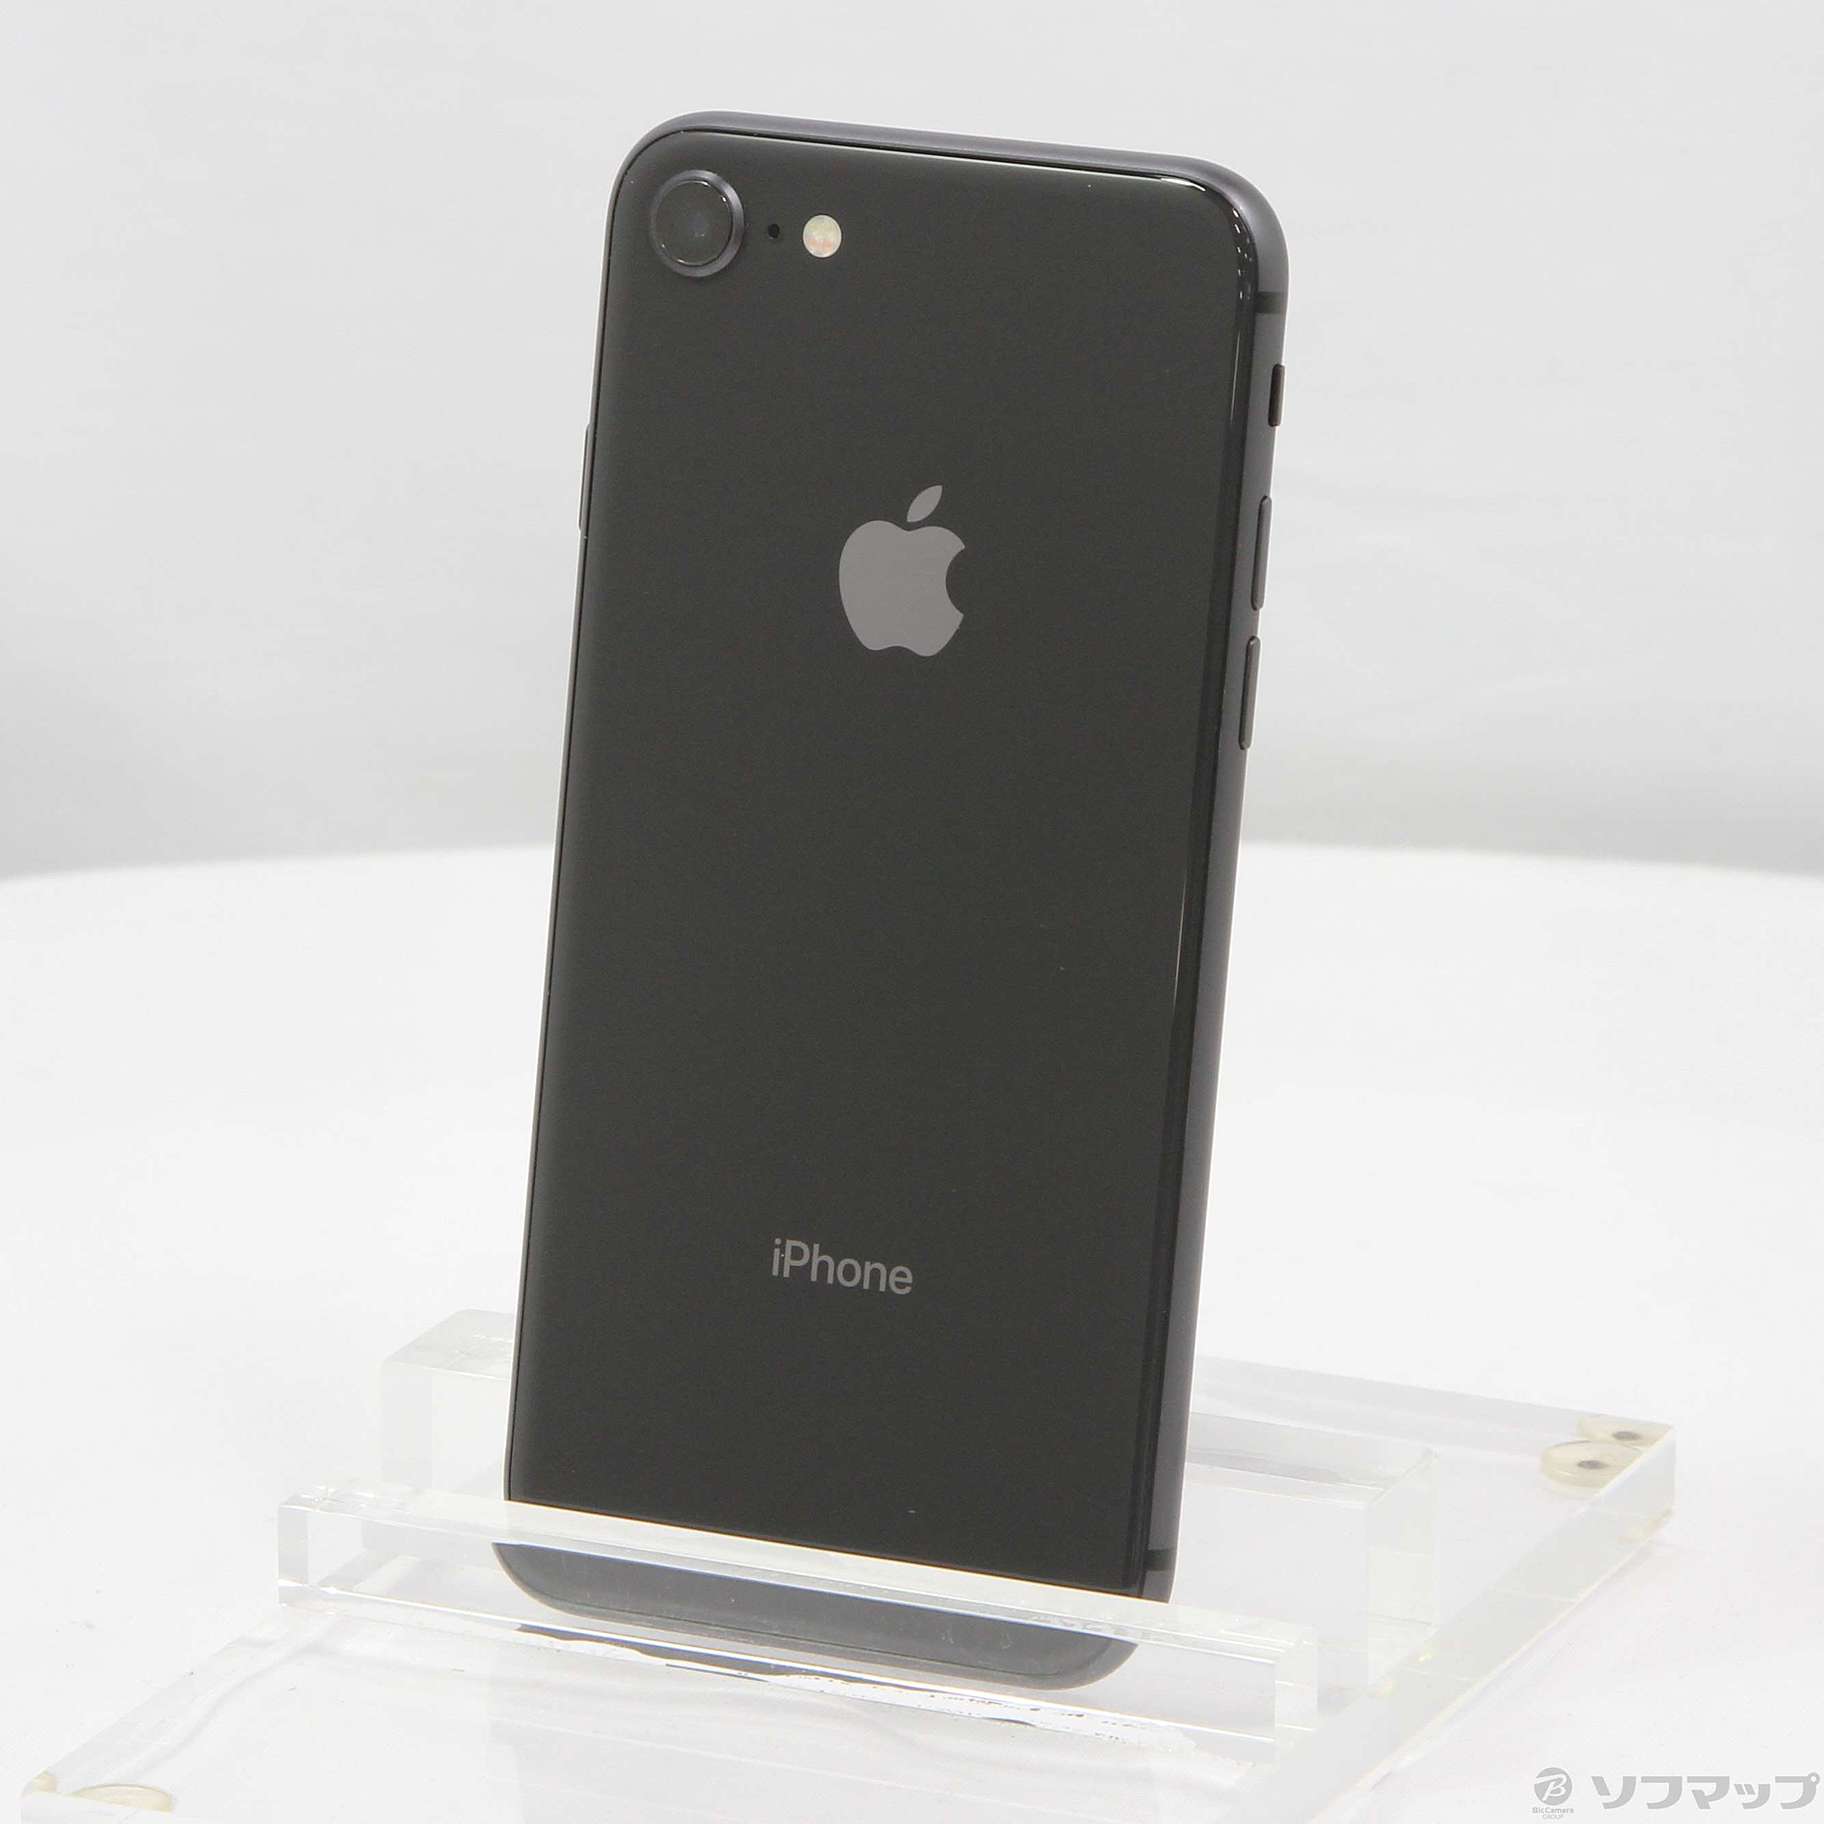 iPhone8 64GB スペースグレイmq782j/a